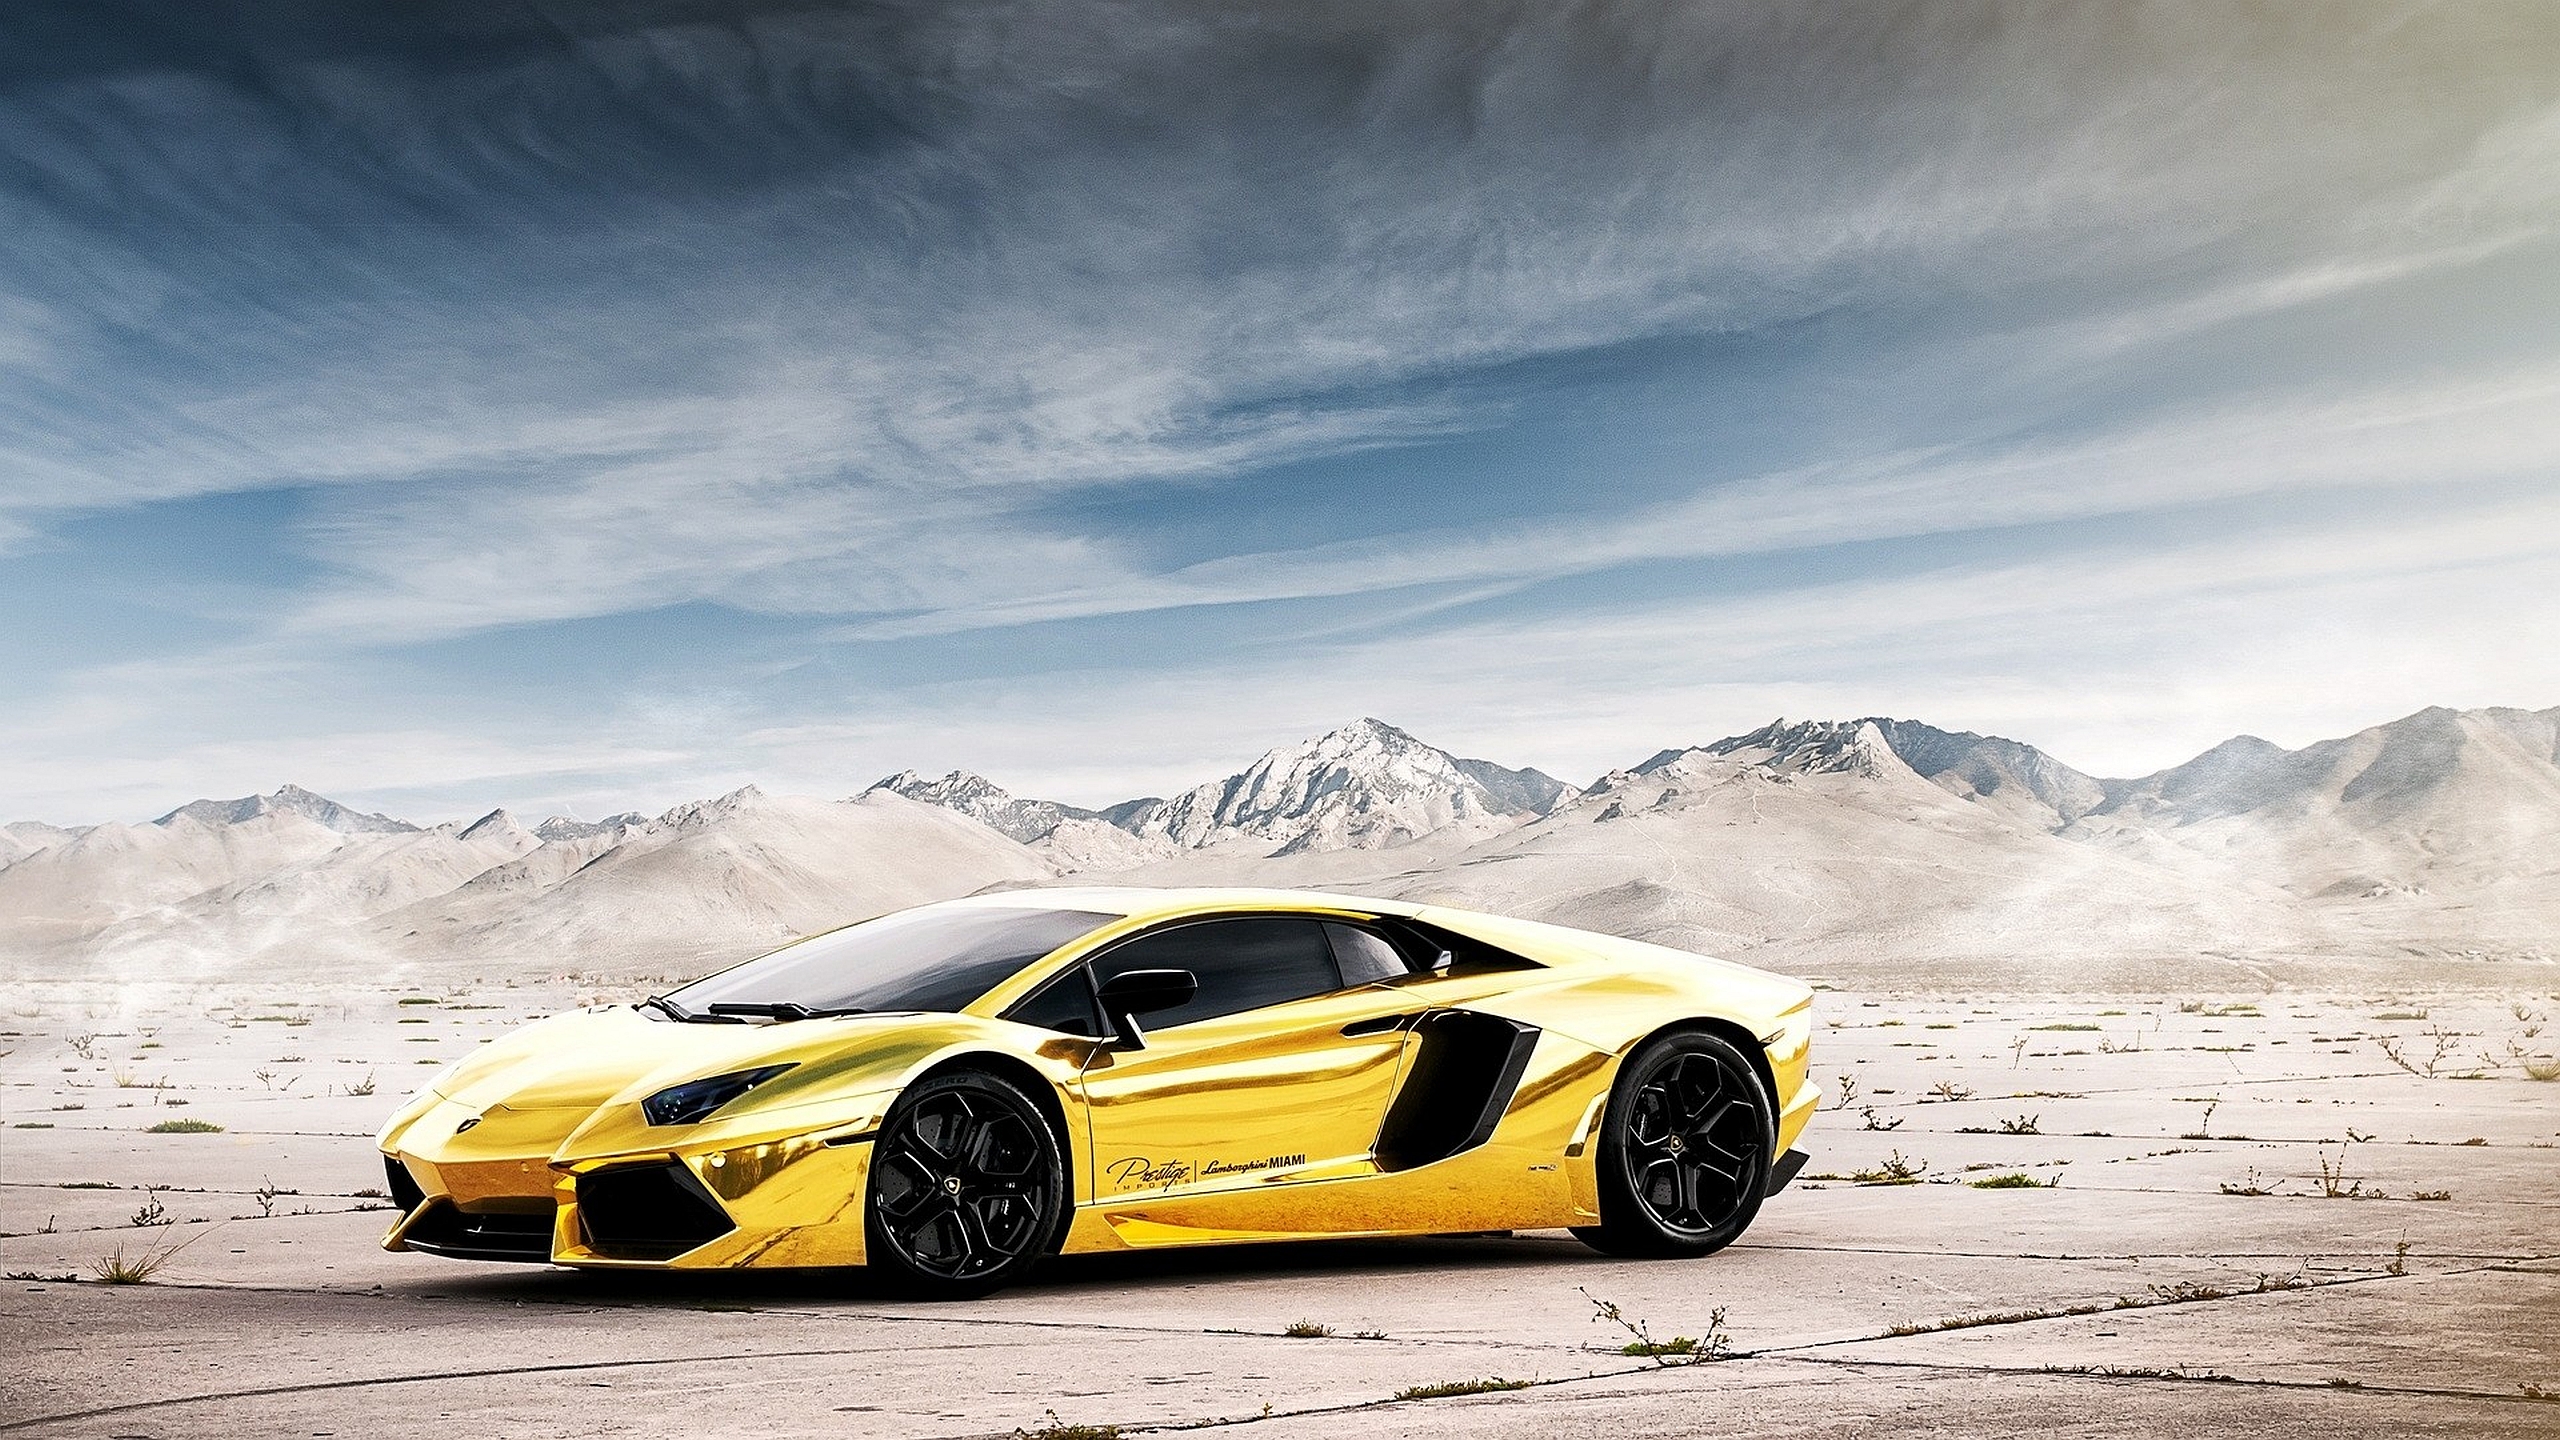 Lamborghini Full HD Wallpaper and Background Image ...